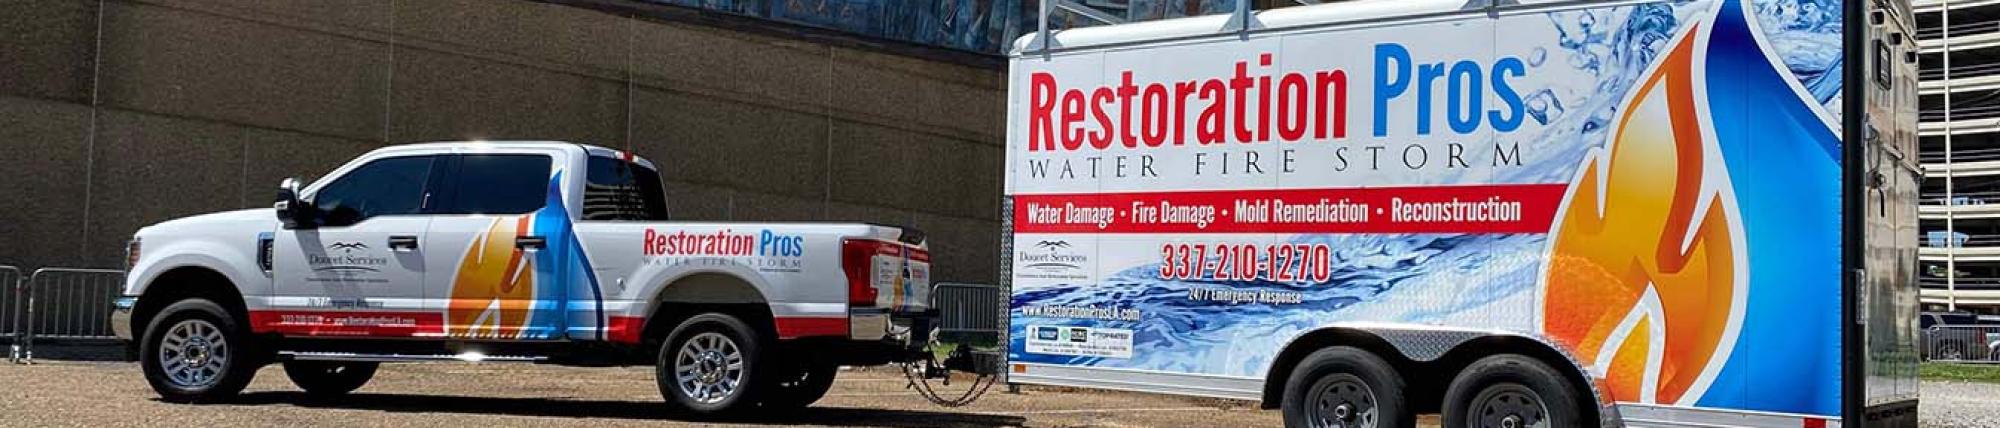 image of water damage restoration company truck